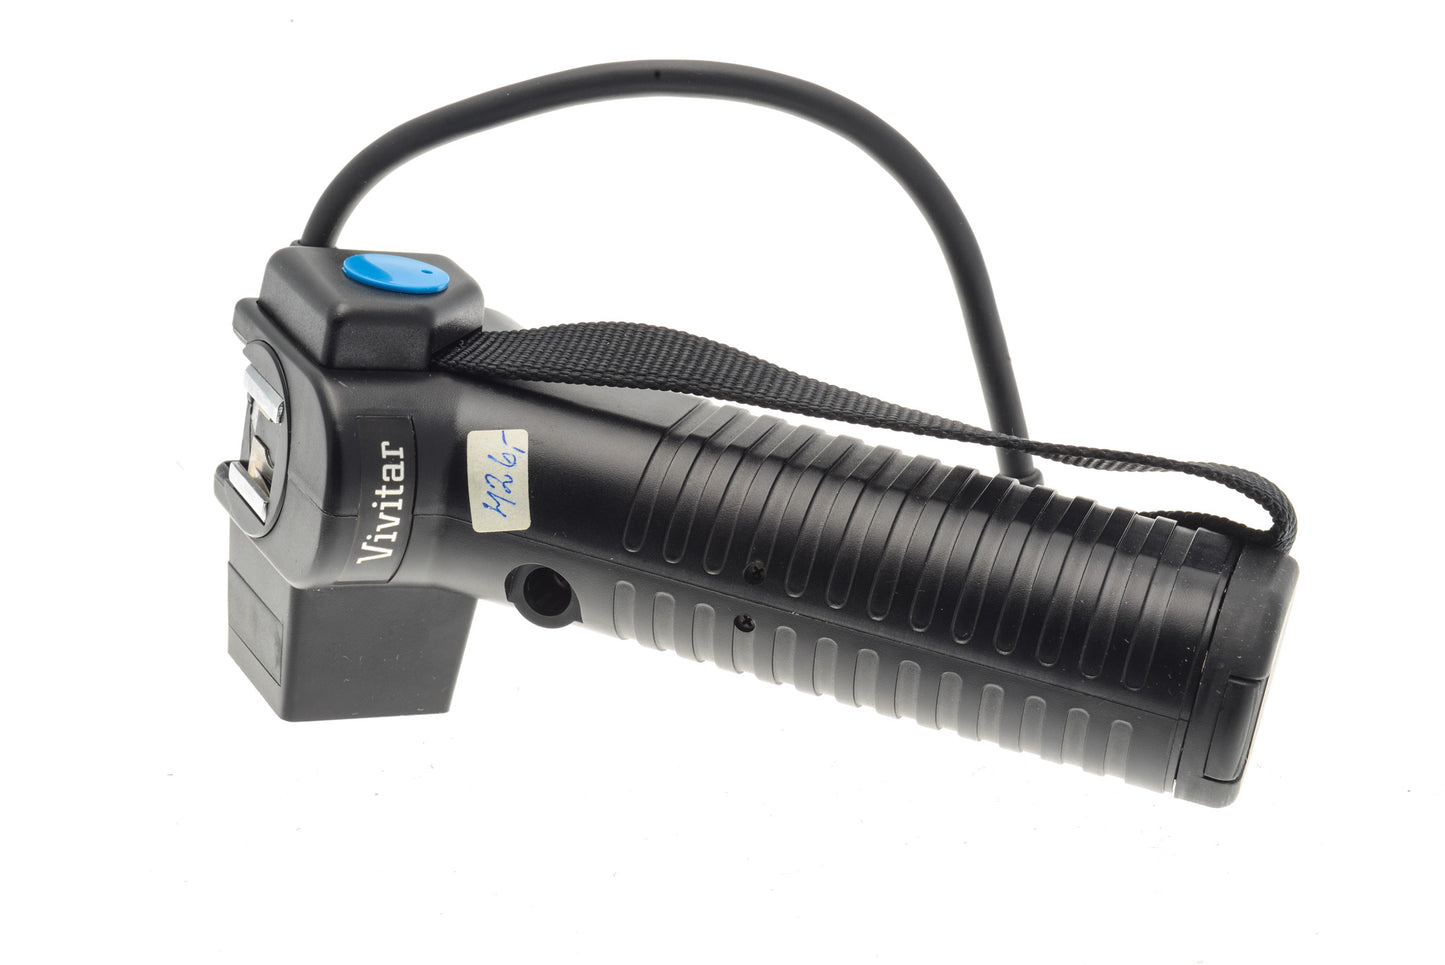 Vivitar PPG-1 Quick Release Power Pistol Grip